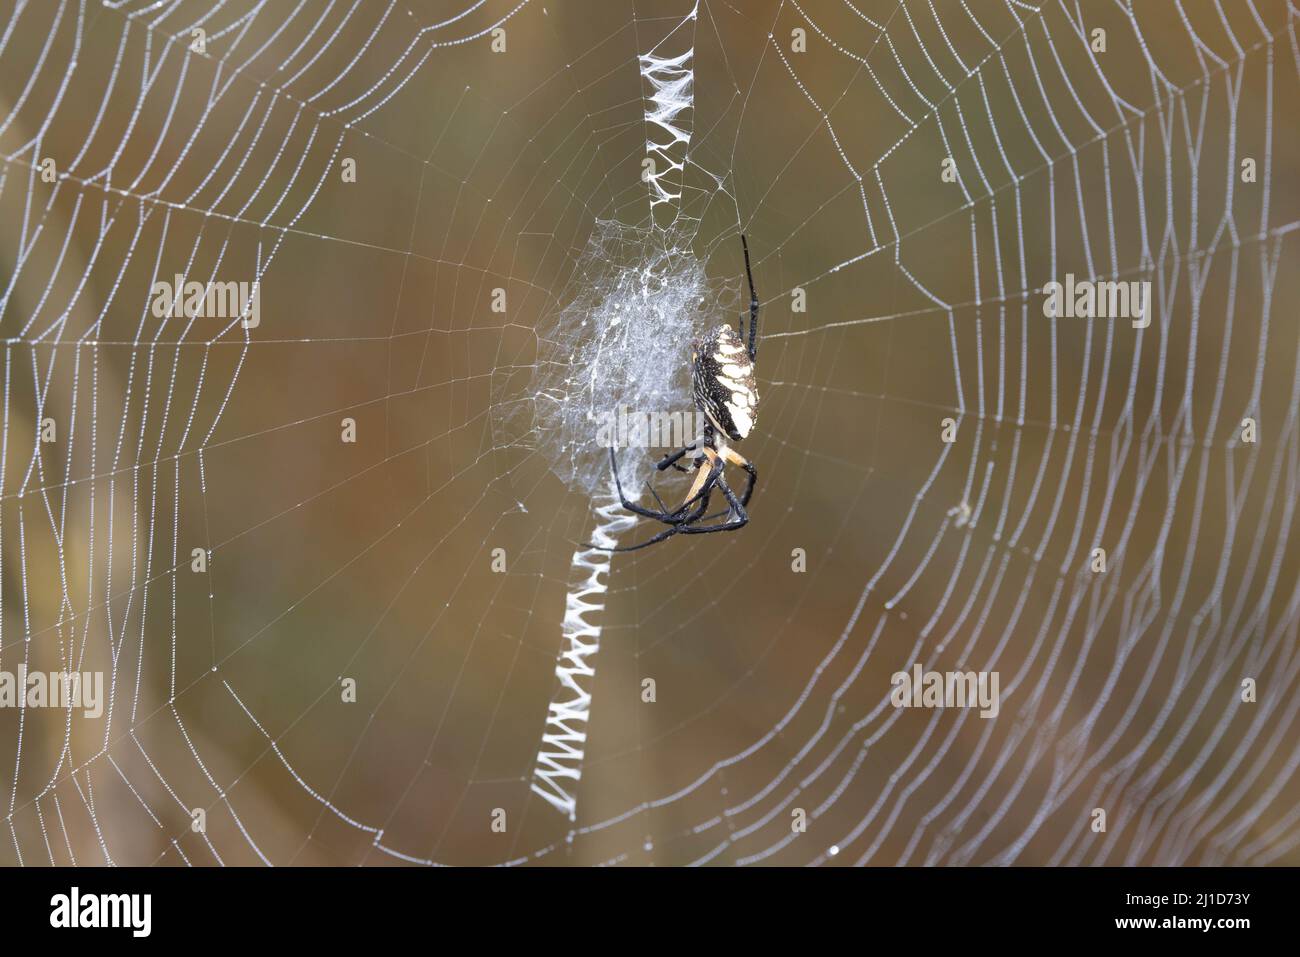 Yellow Garden Spider, Bosque del Apache National Wildlife Refuge, New Mexico, USA. Stock Photo